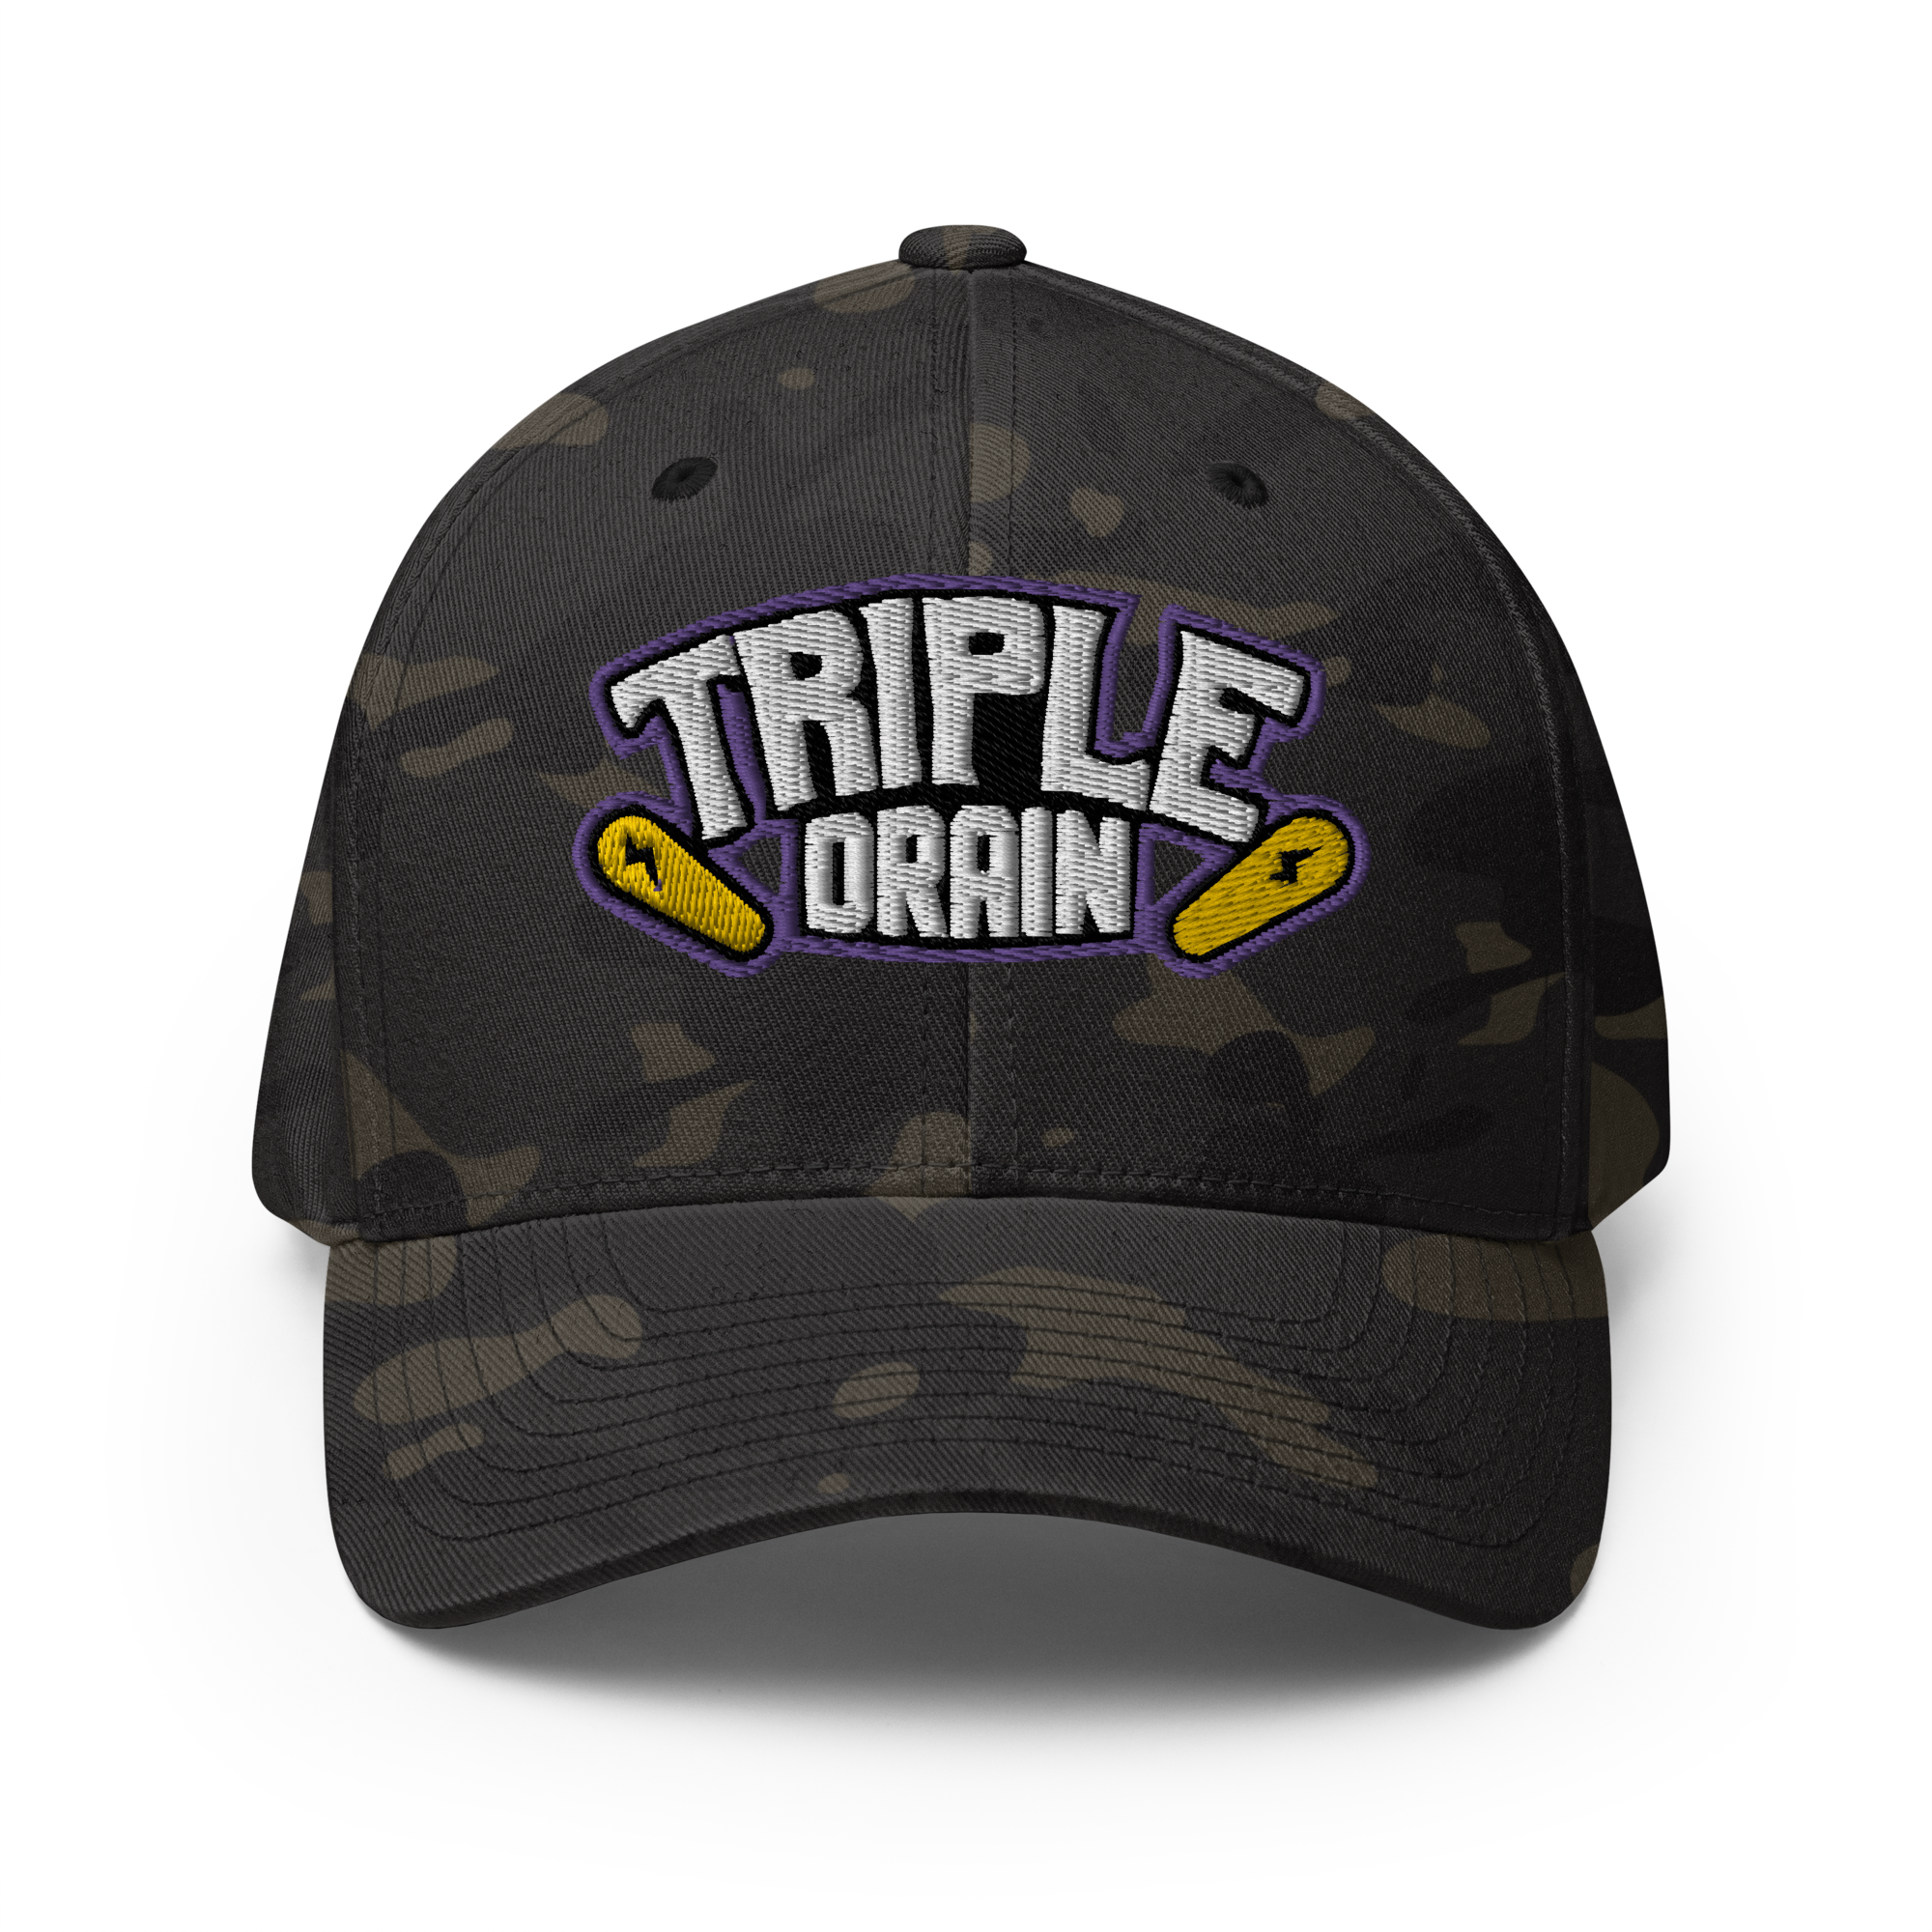 Triple Drain - Flexfit Cap